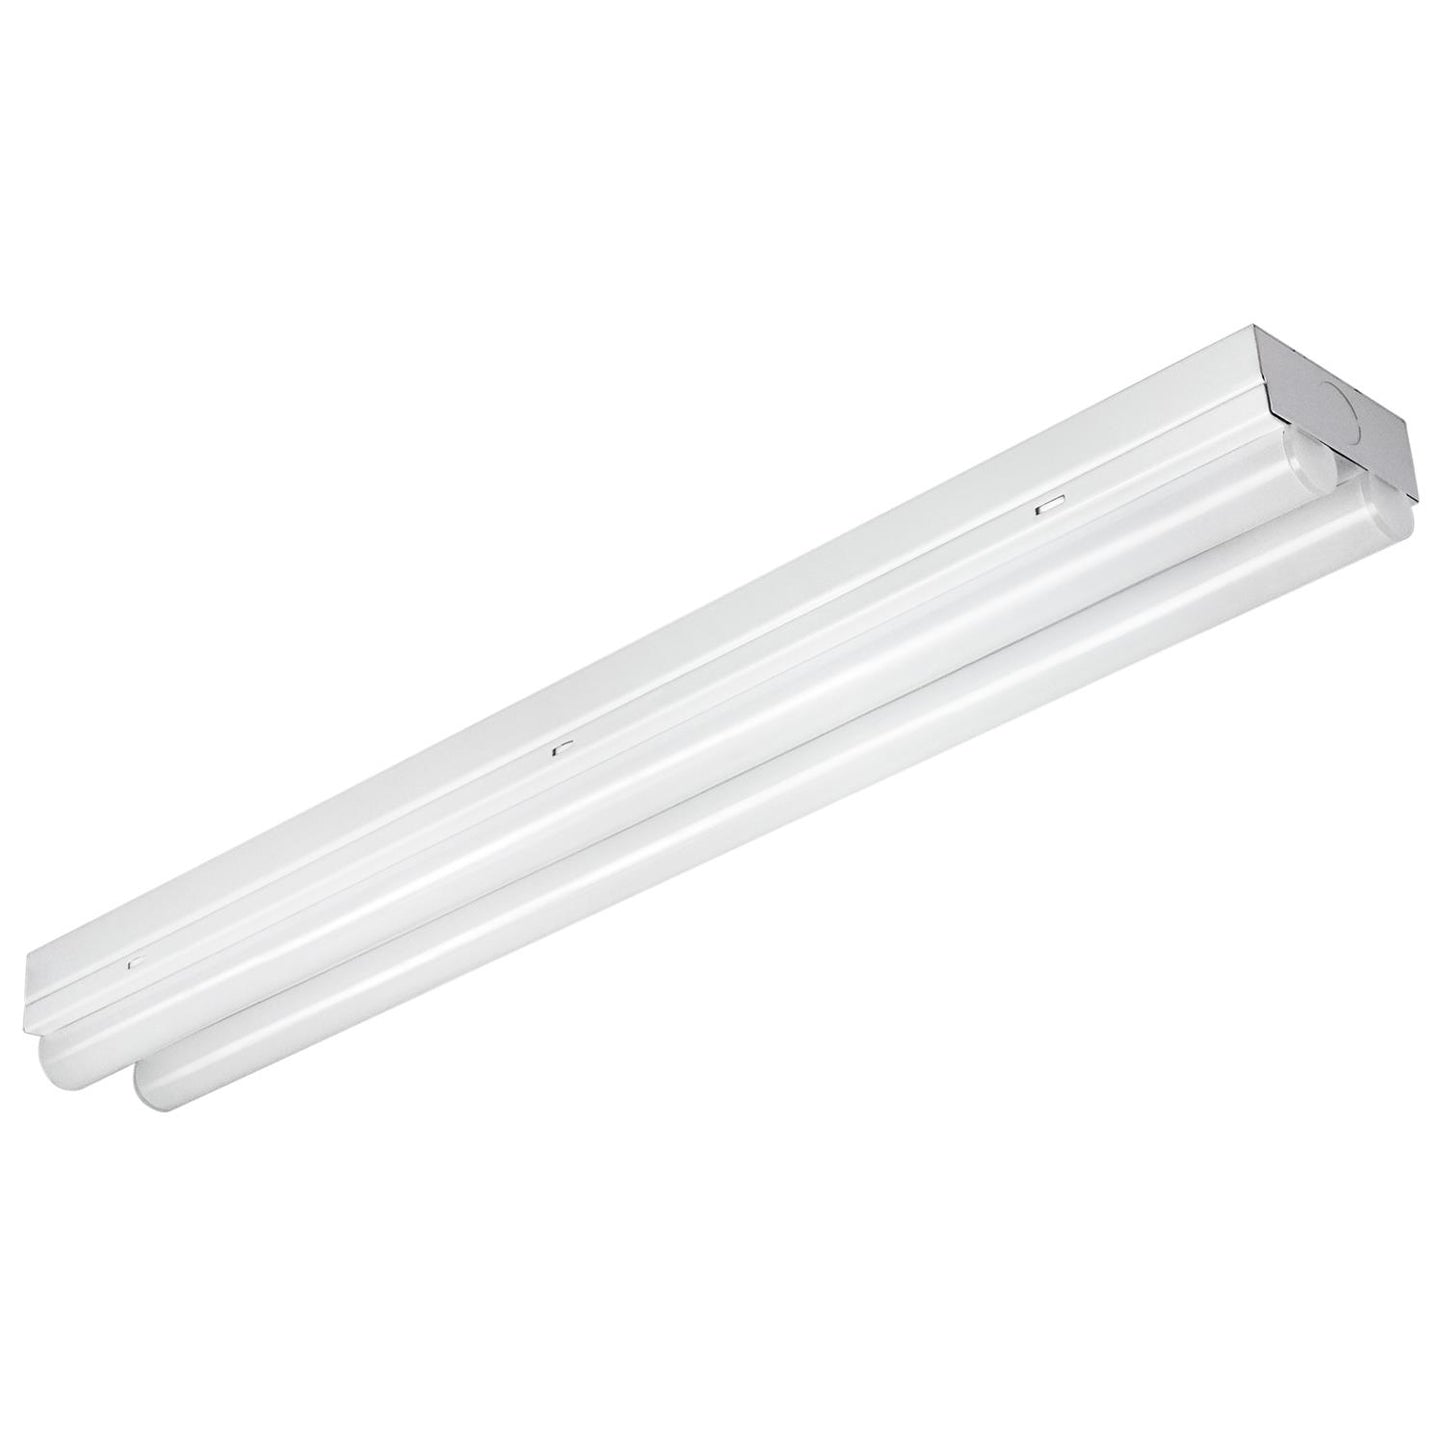 Sunlite LED 24" Linear Dual Strip Fixture, 15 Watts, 5000K Super White, 1900 Lumen